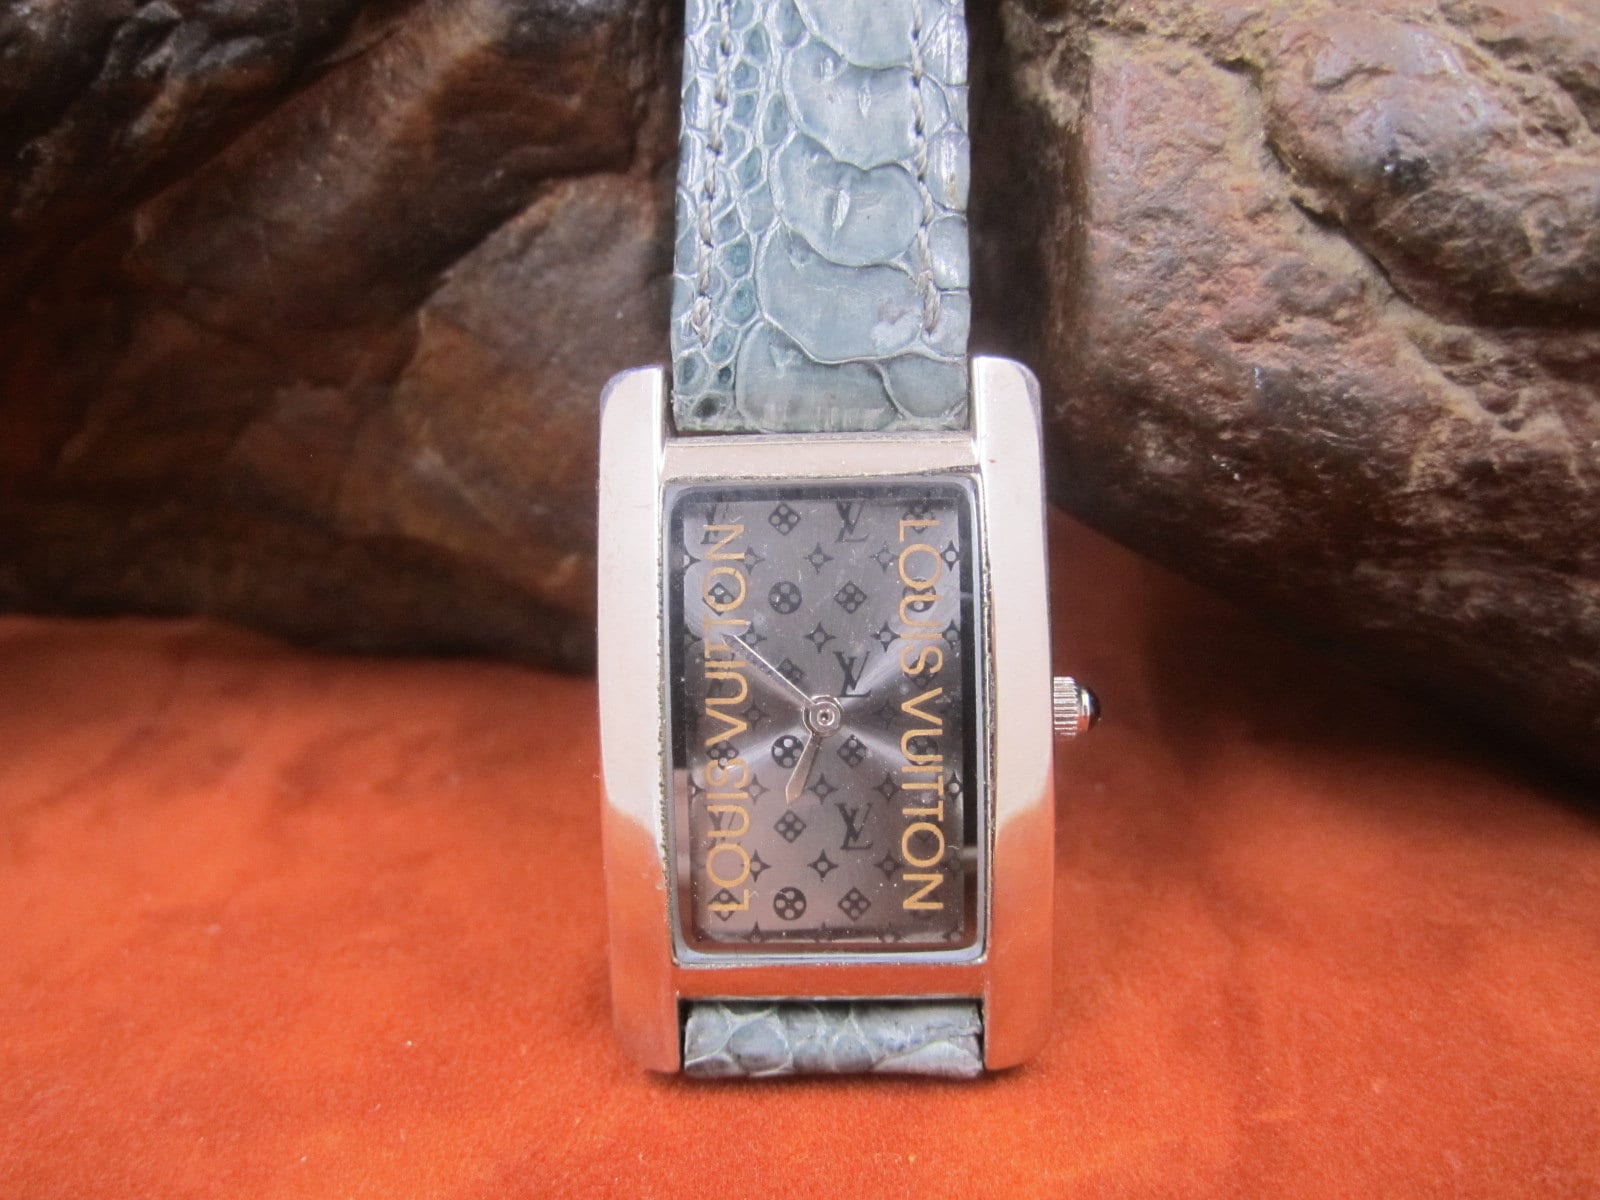 Louis Vuitton Silver tone Watch